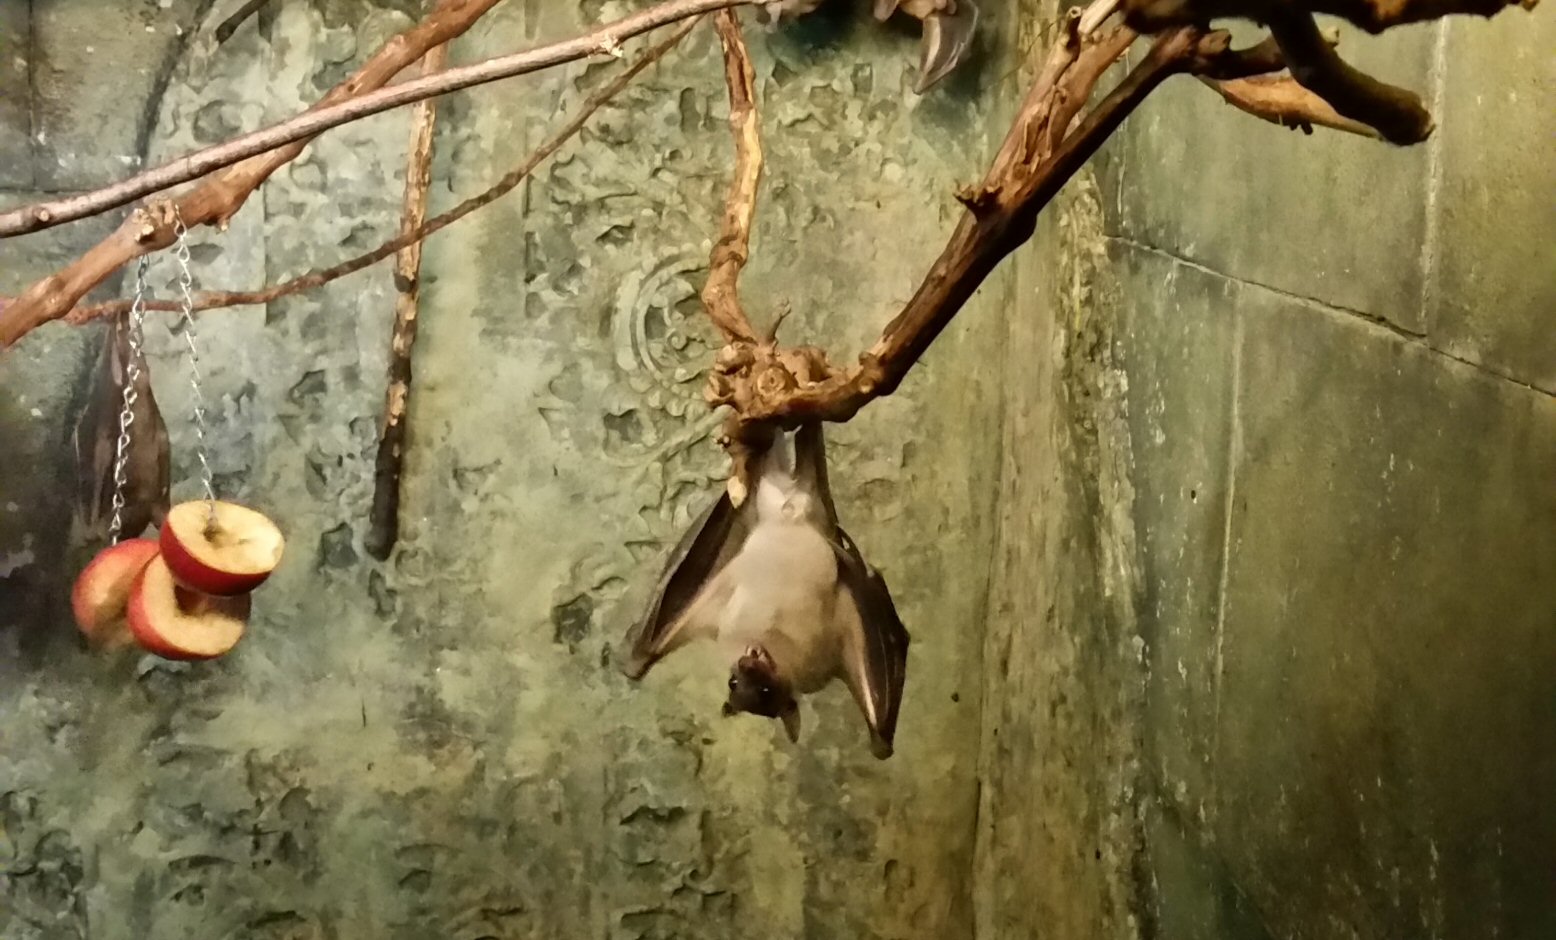 A Bat in Low Lighting in the Bat Exhibit - Very Much Awake